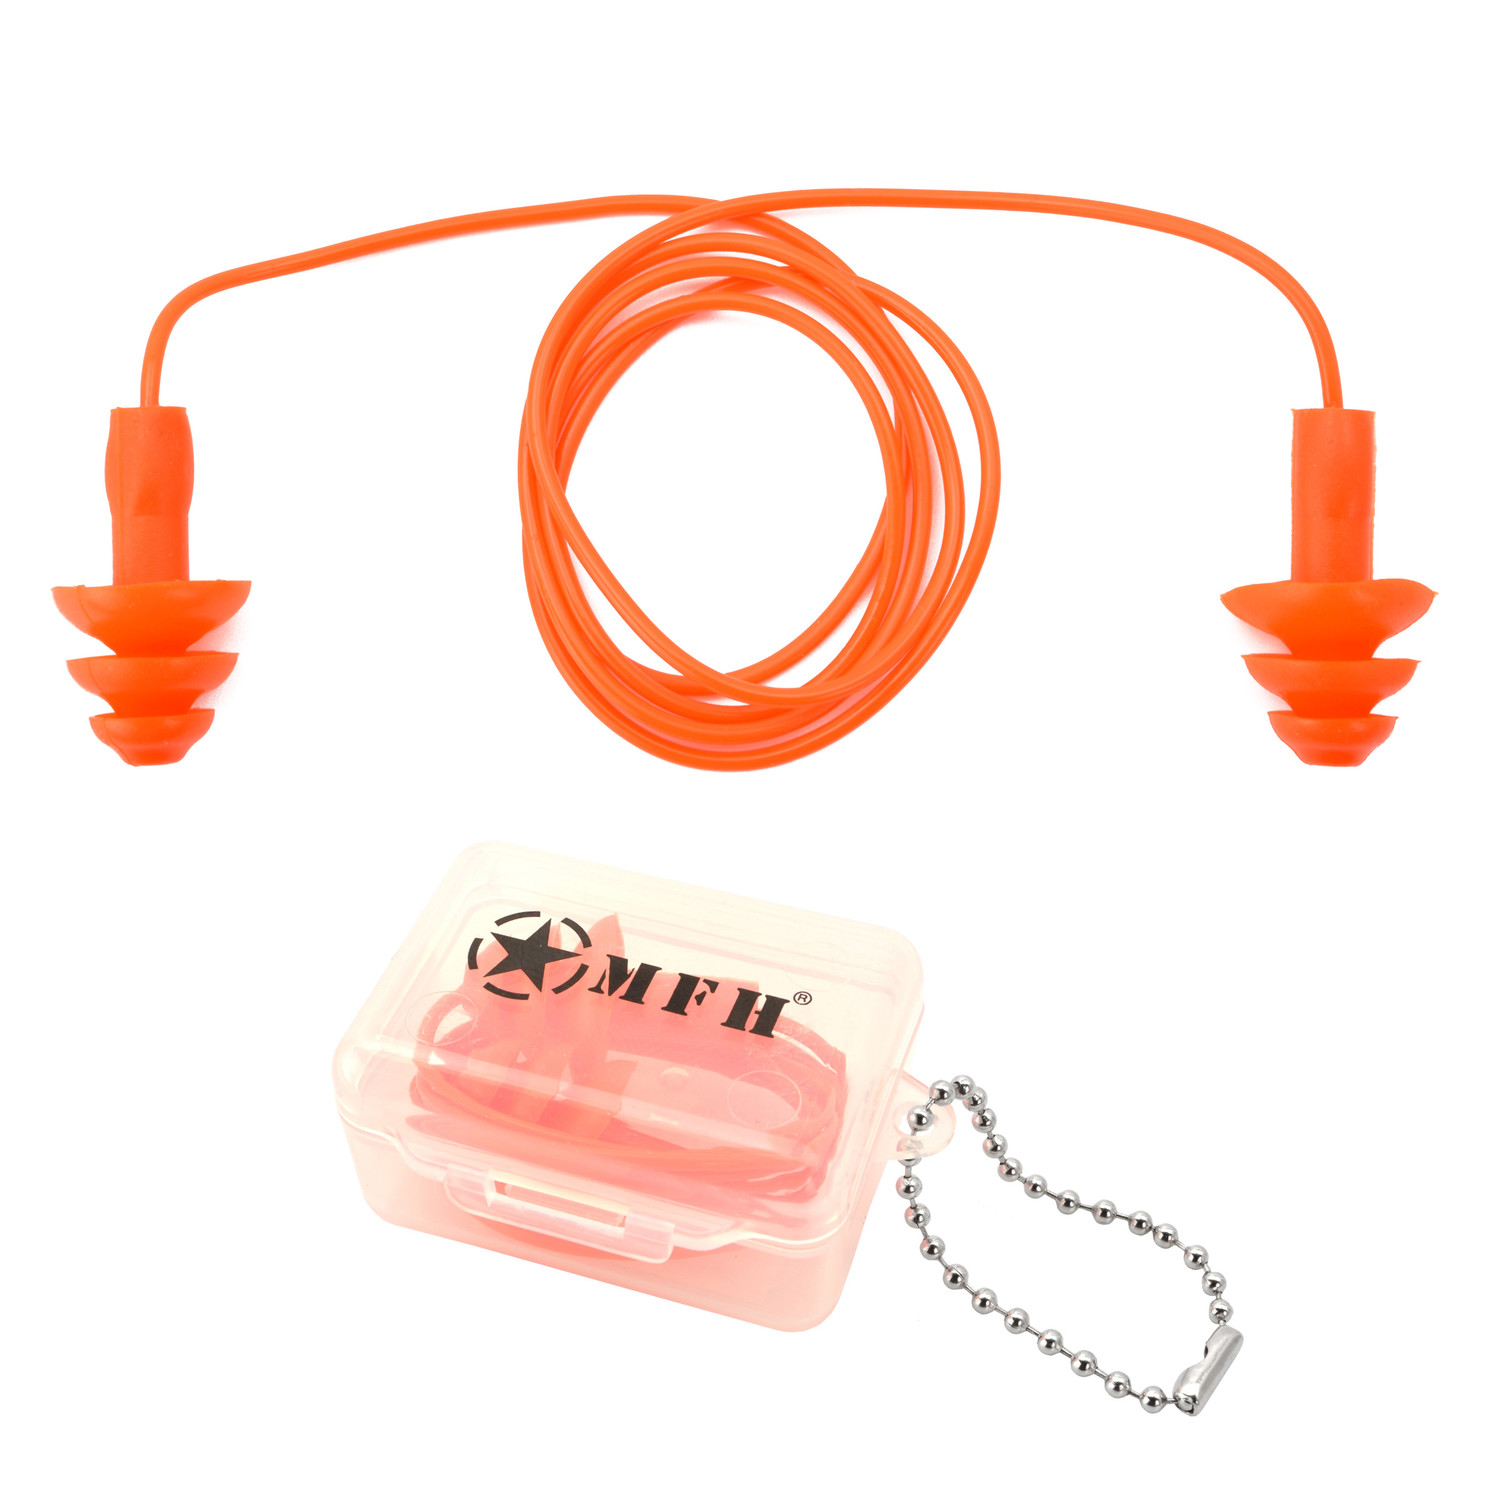 https://simigu.de/media/image/product/2370/lg/gehoerschutzstoepsel-mit-band-in-orange-inkl-transportbox.jpg